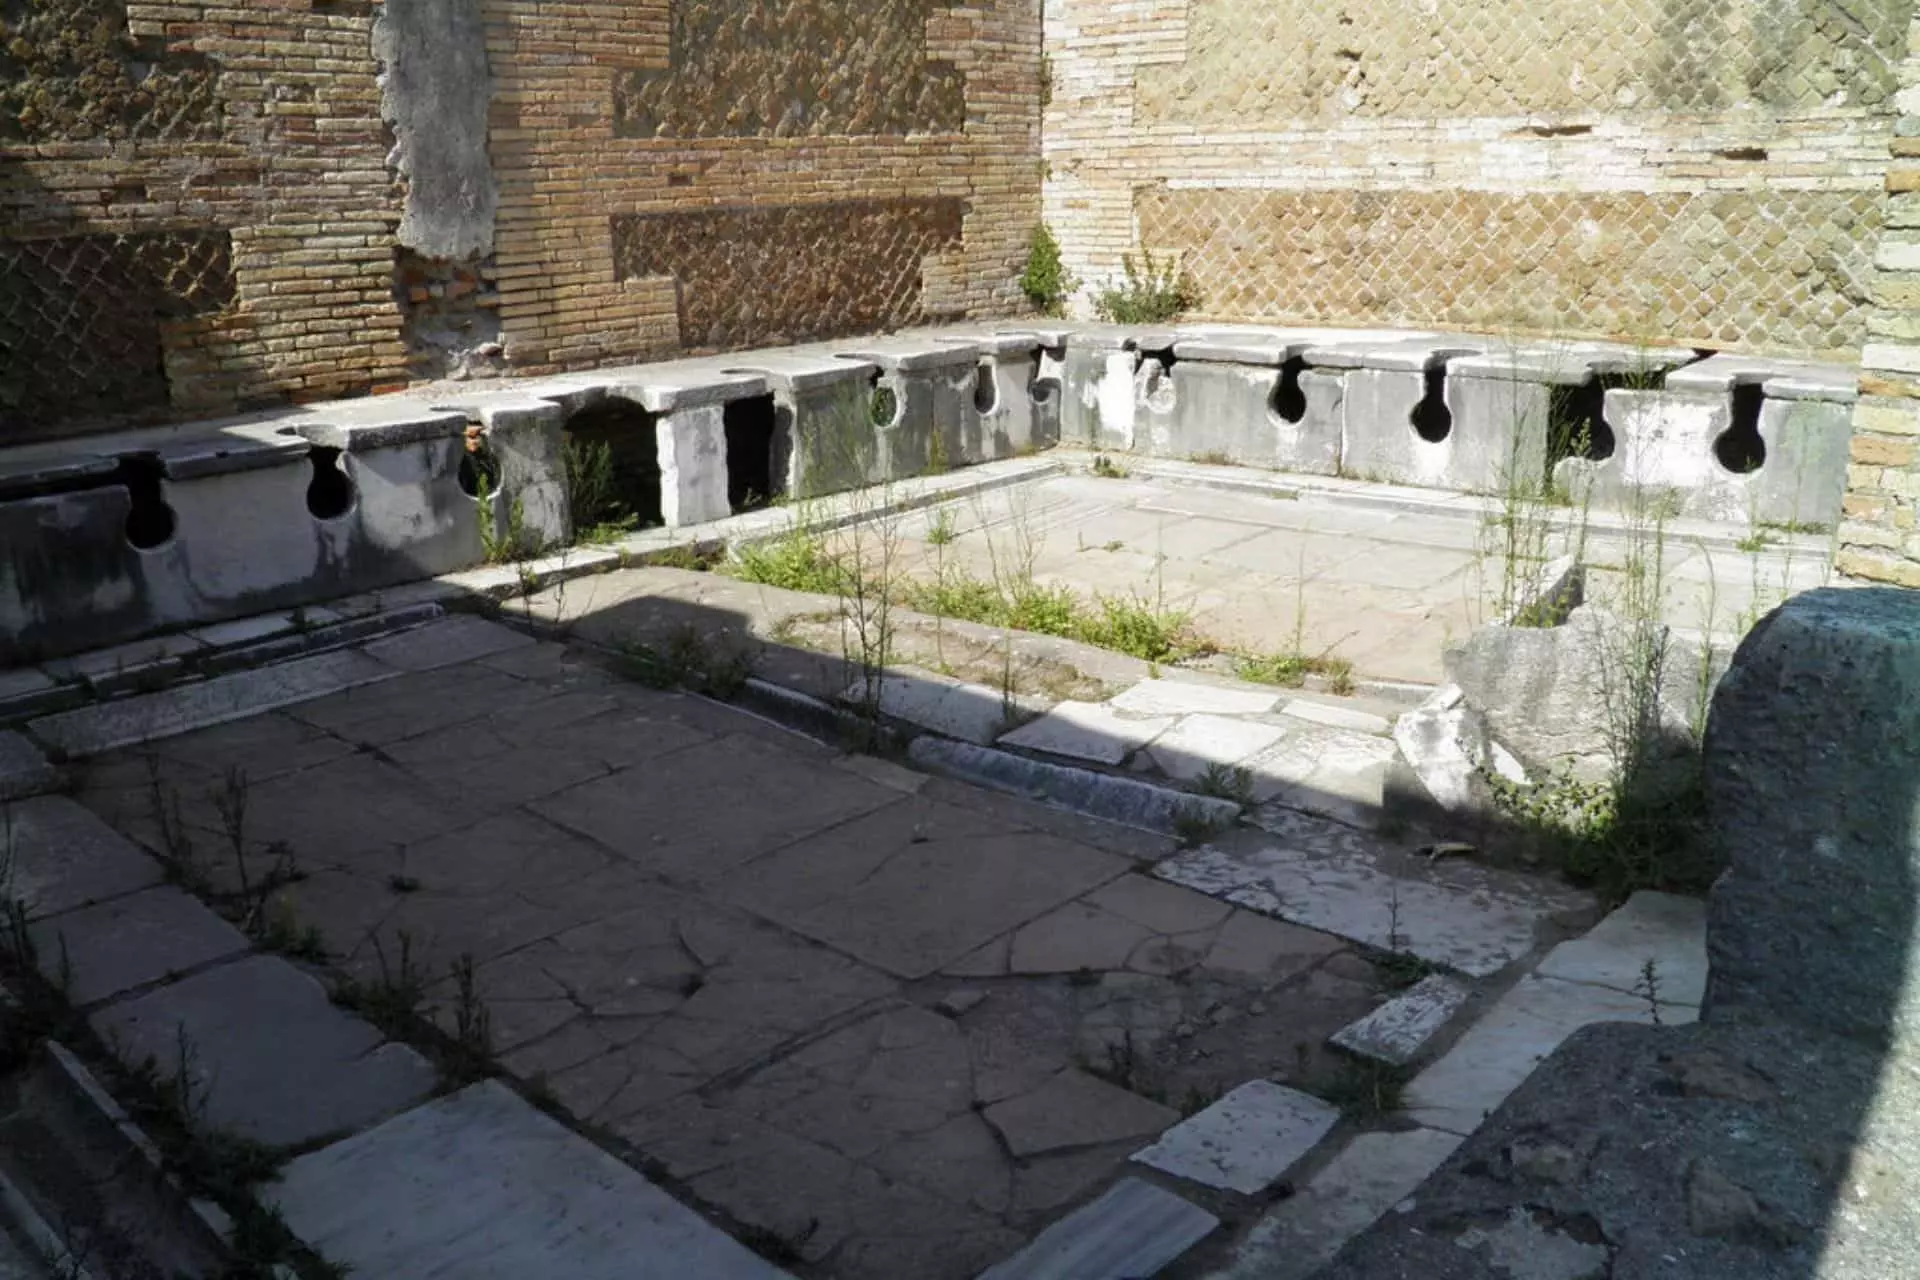 Early latrines in the Roman Empire